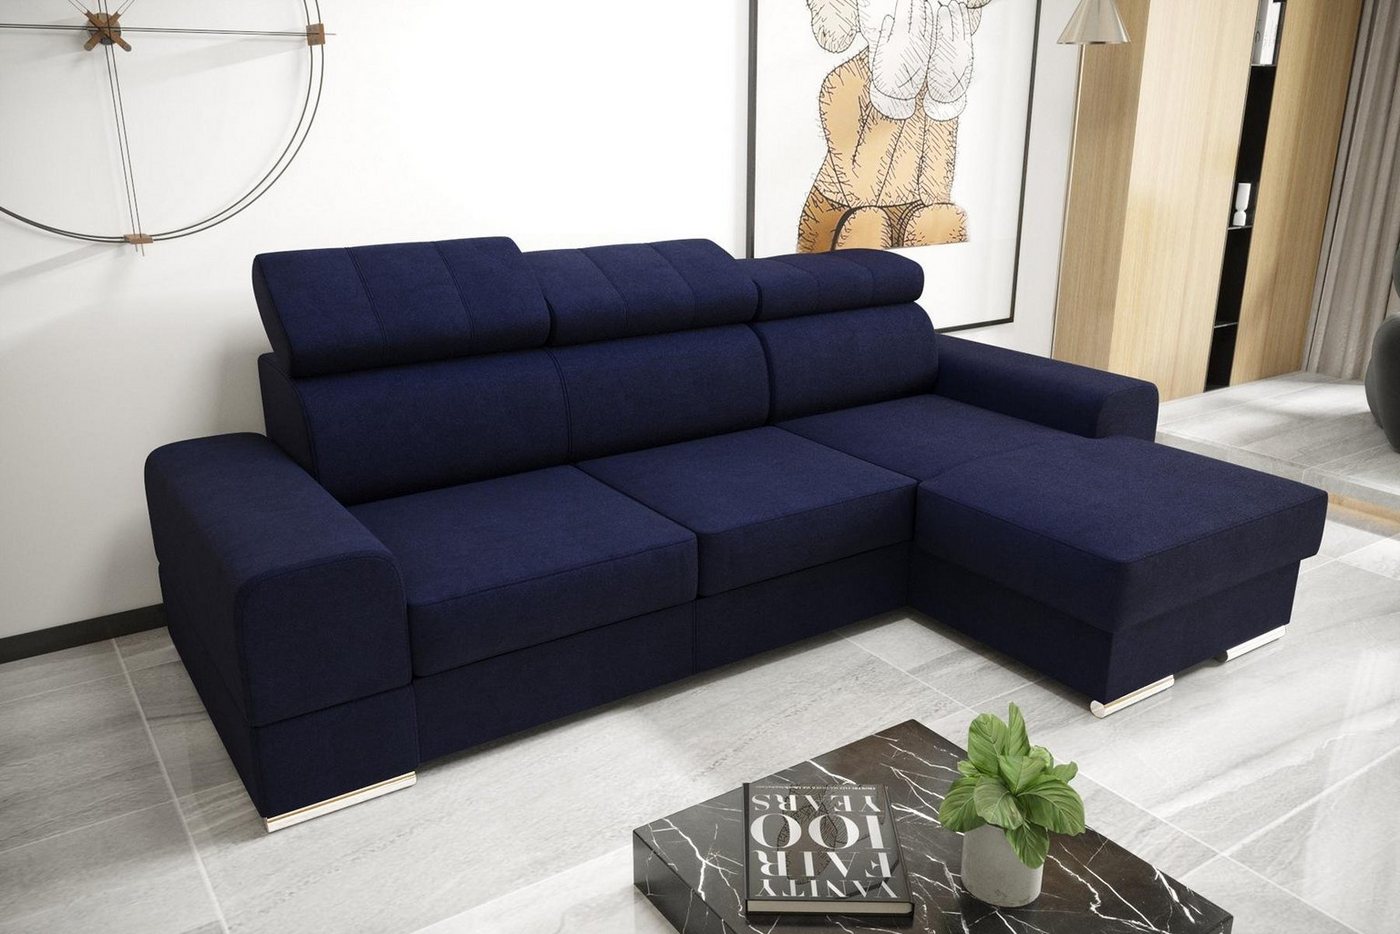 JVmoebel Ecksofa Wohnlandschaft Bettfunktion Stoff Ecksofa L-Form Sofa Couch, Made in Europe von JVmoebel